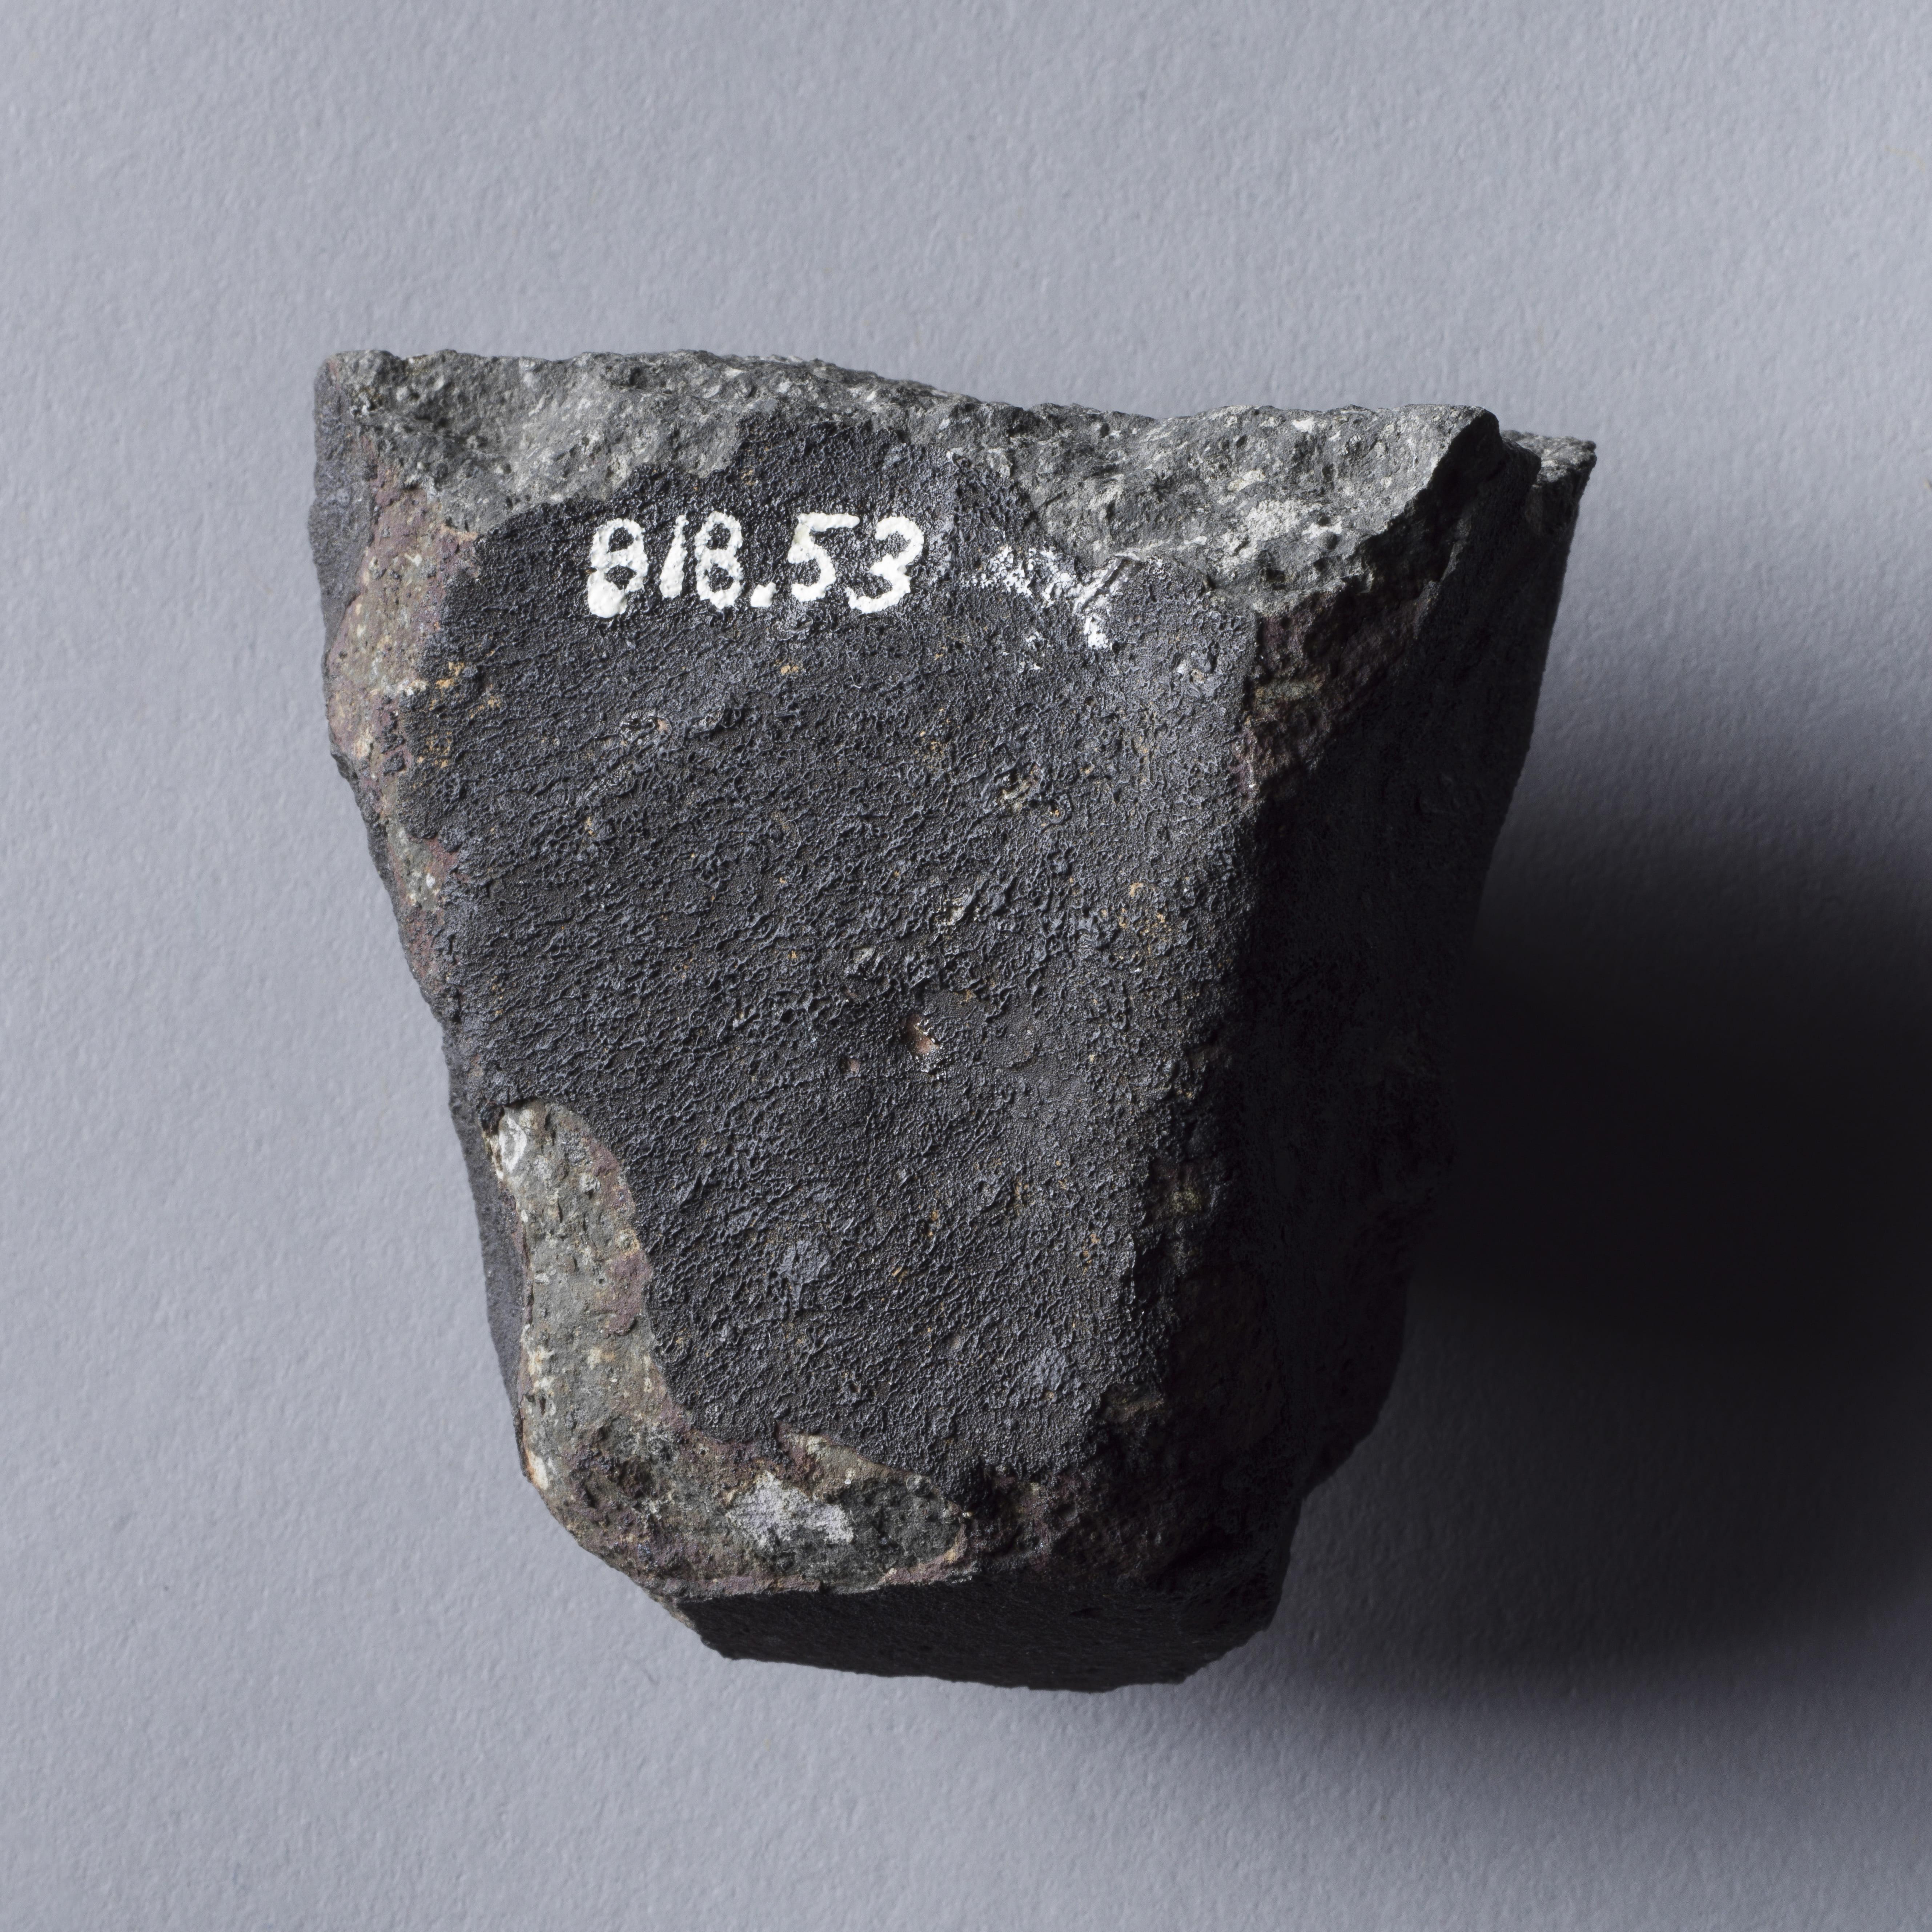 allende meteorite for sale